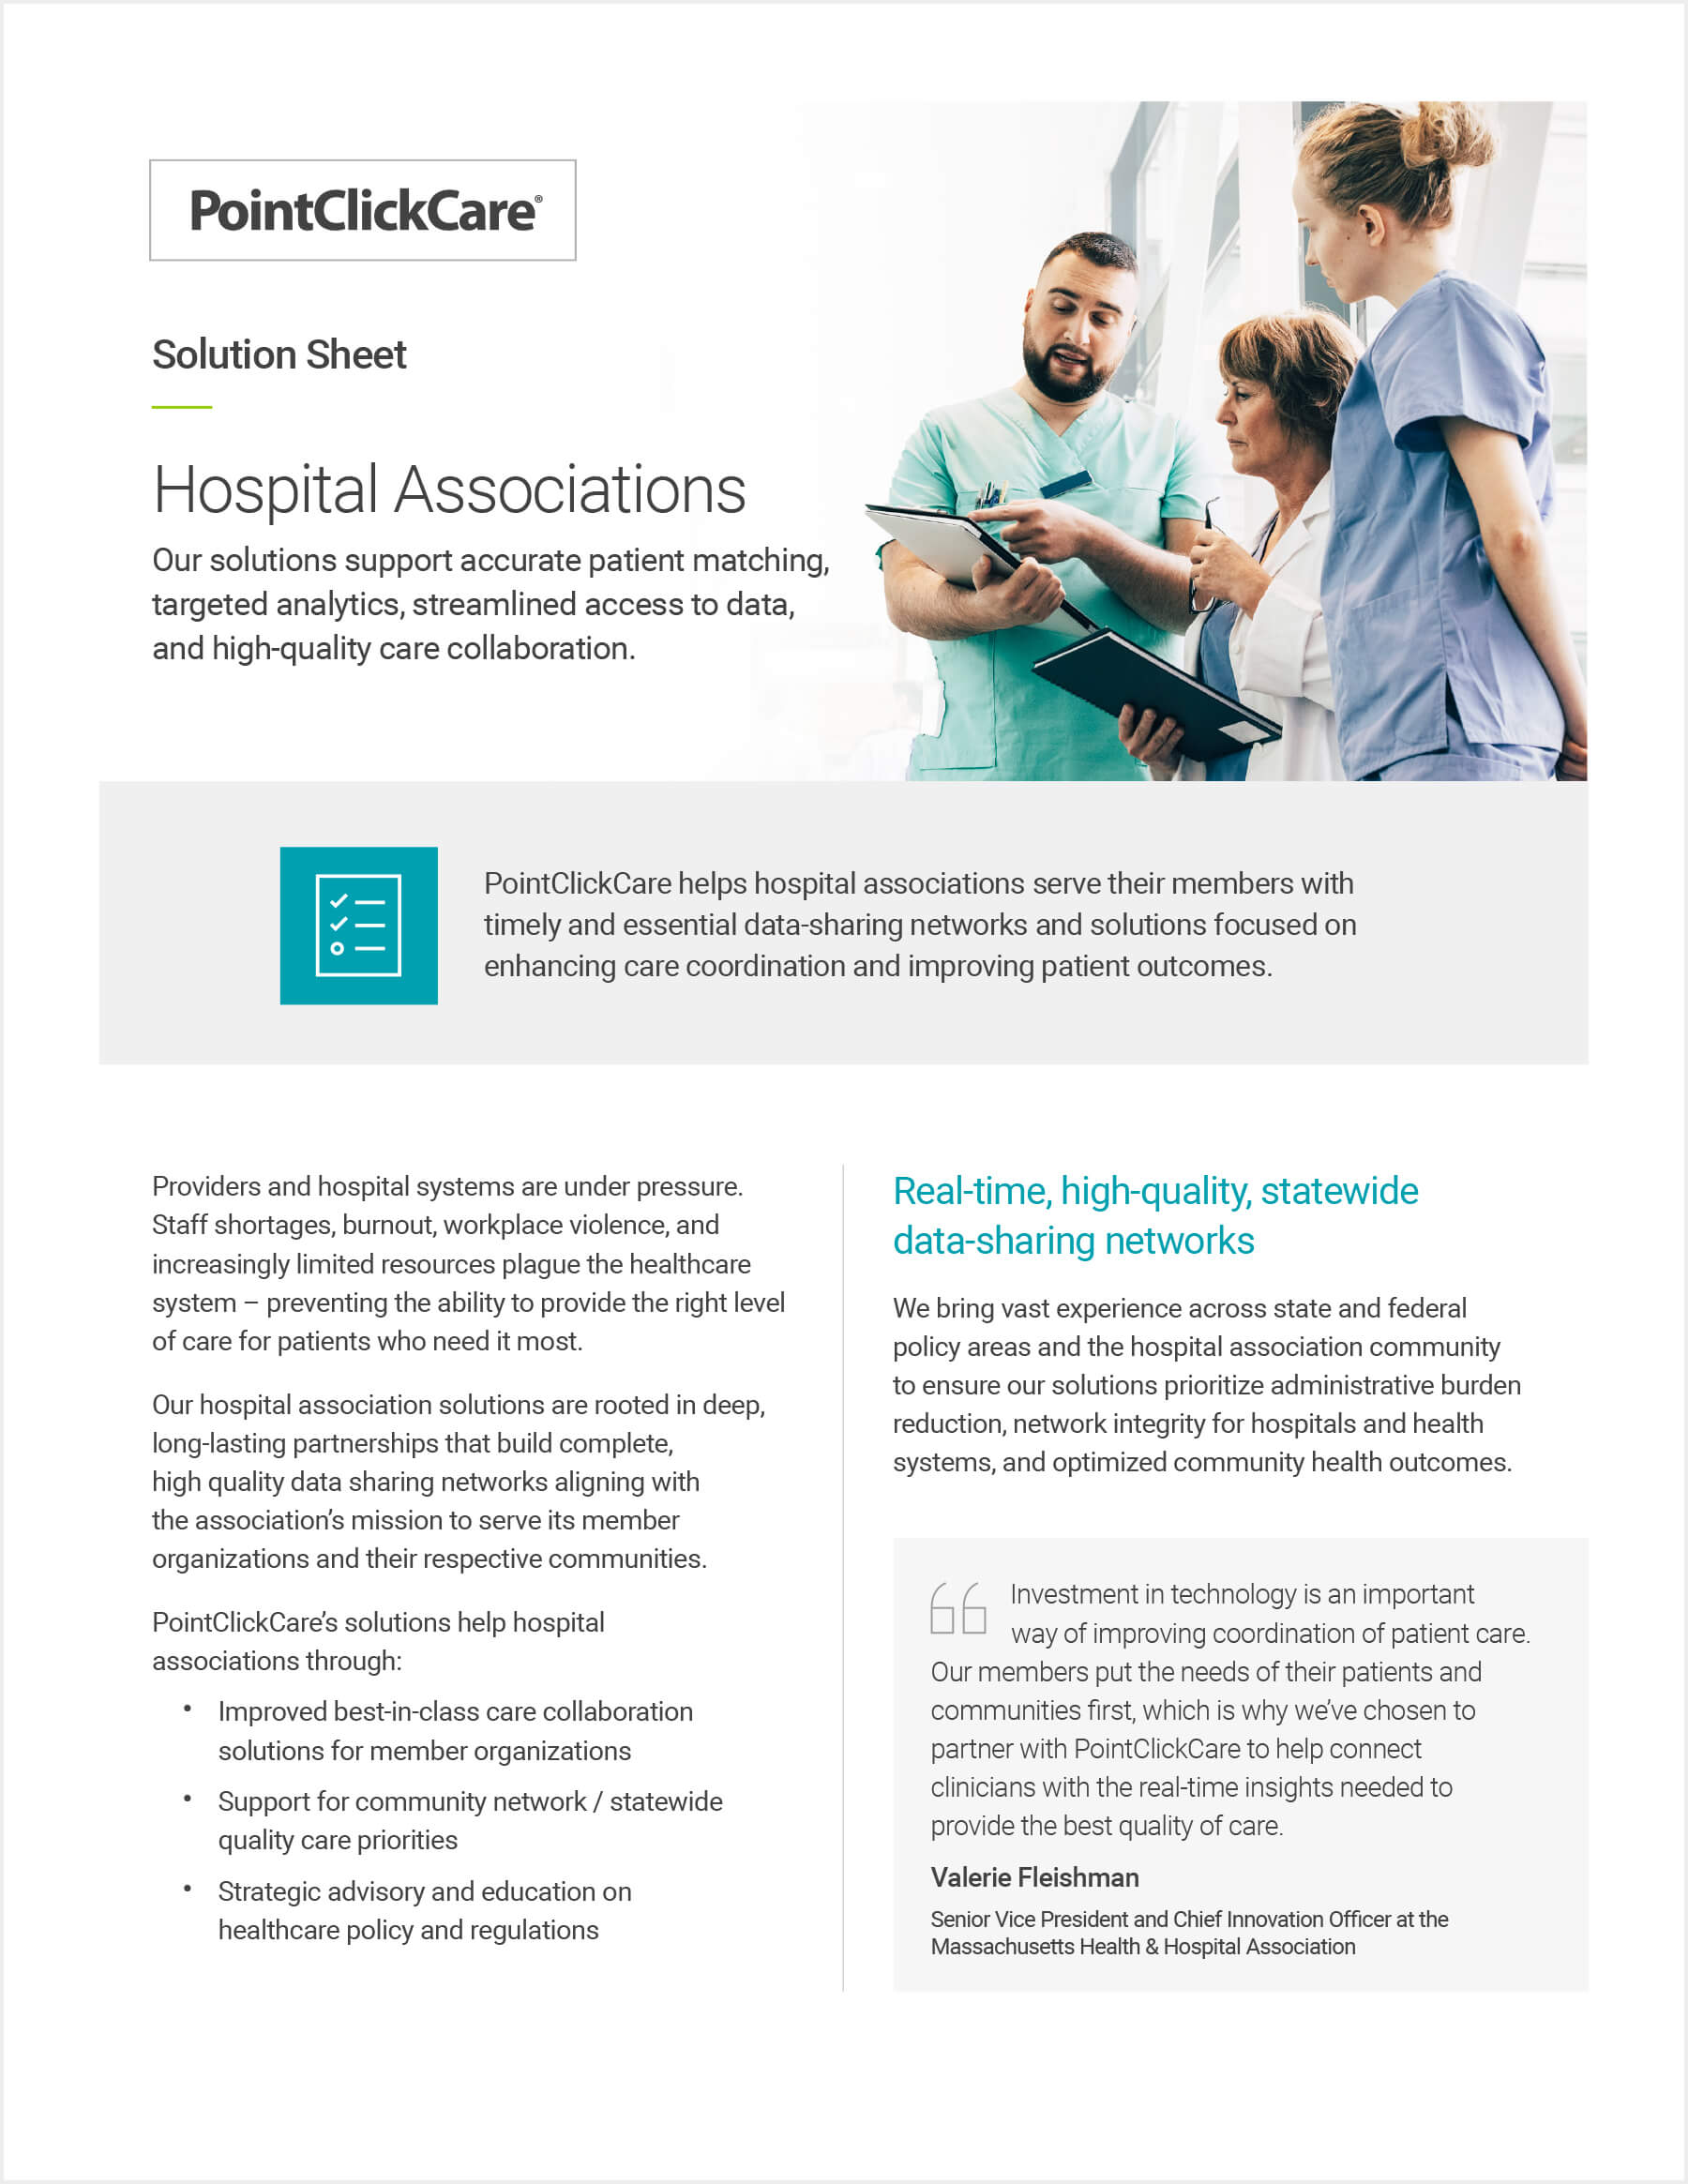 Hospital Associations solution sheet thumbnail